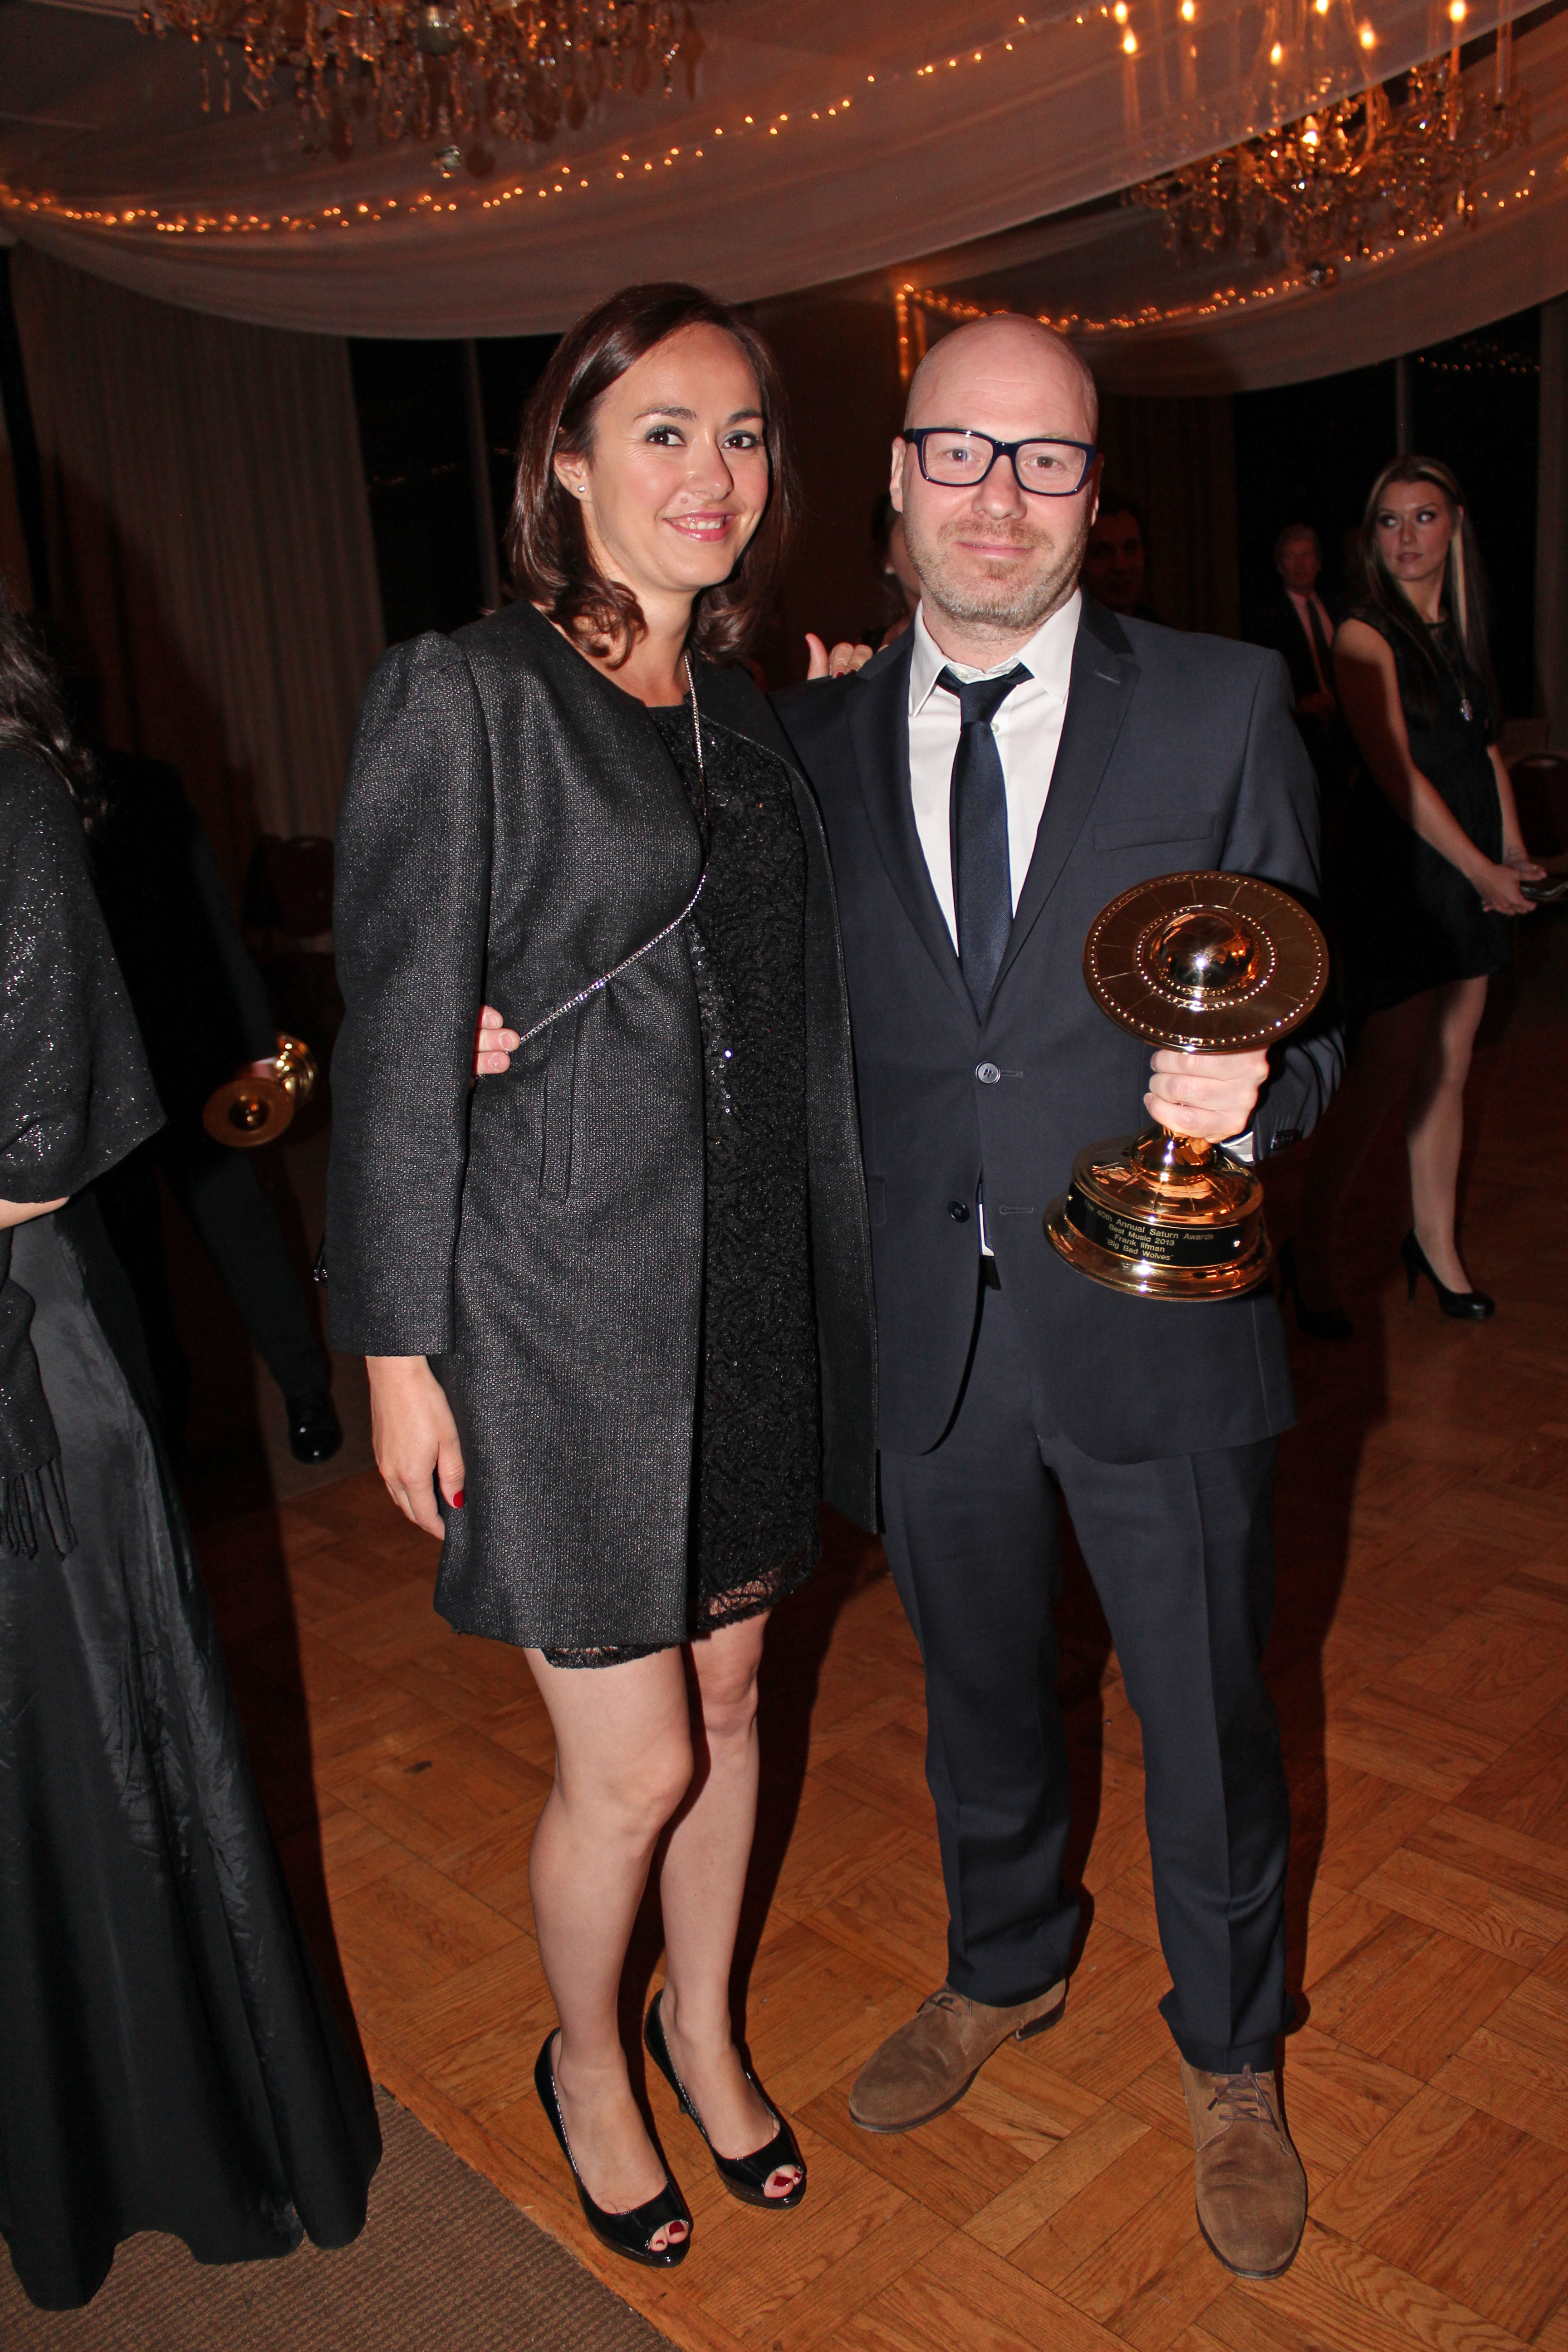 Frank Ilfman and Susana Nakatani-Ilfman at the 40th Saturn Awards. Winner for Best Music 'Big Bad Wolves'